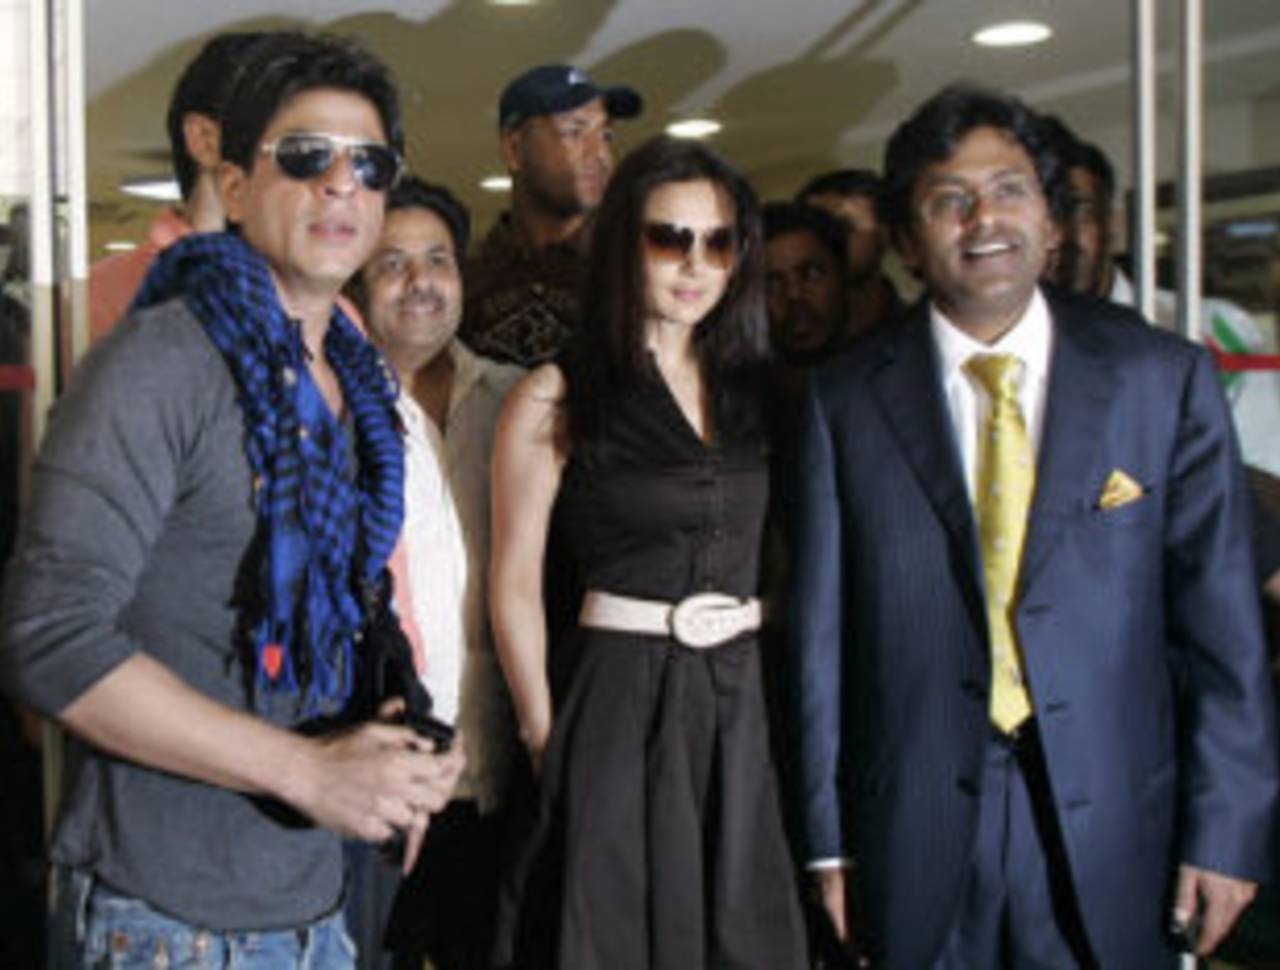 Shah Rukh Khan: "I am the owner of the team, I bought it."&nbsp;&nbsp;&bull;&nbsp;&nbsp;Associated Press